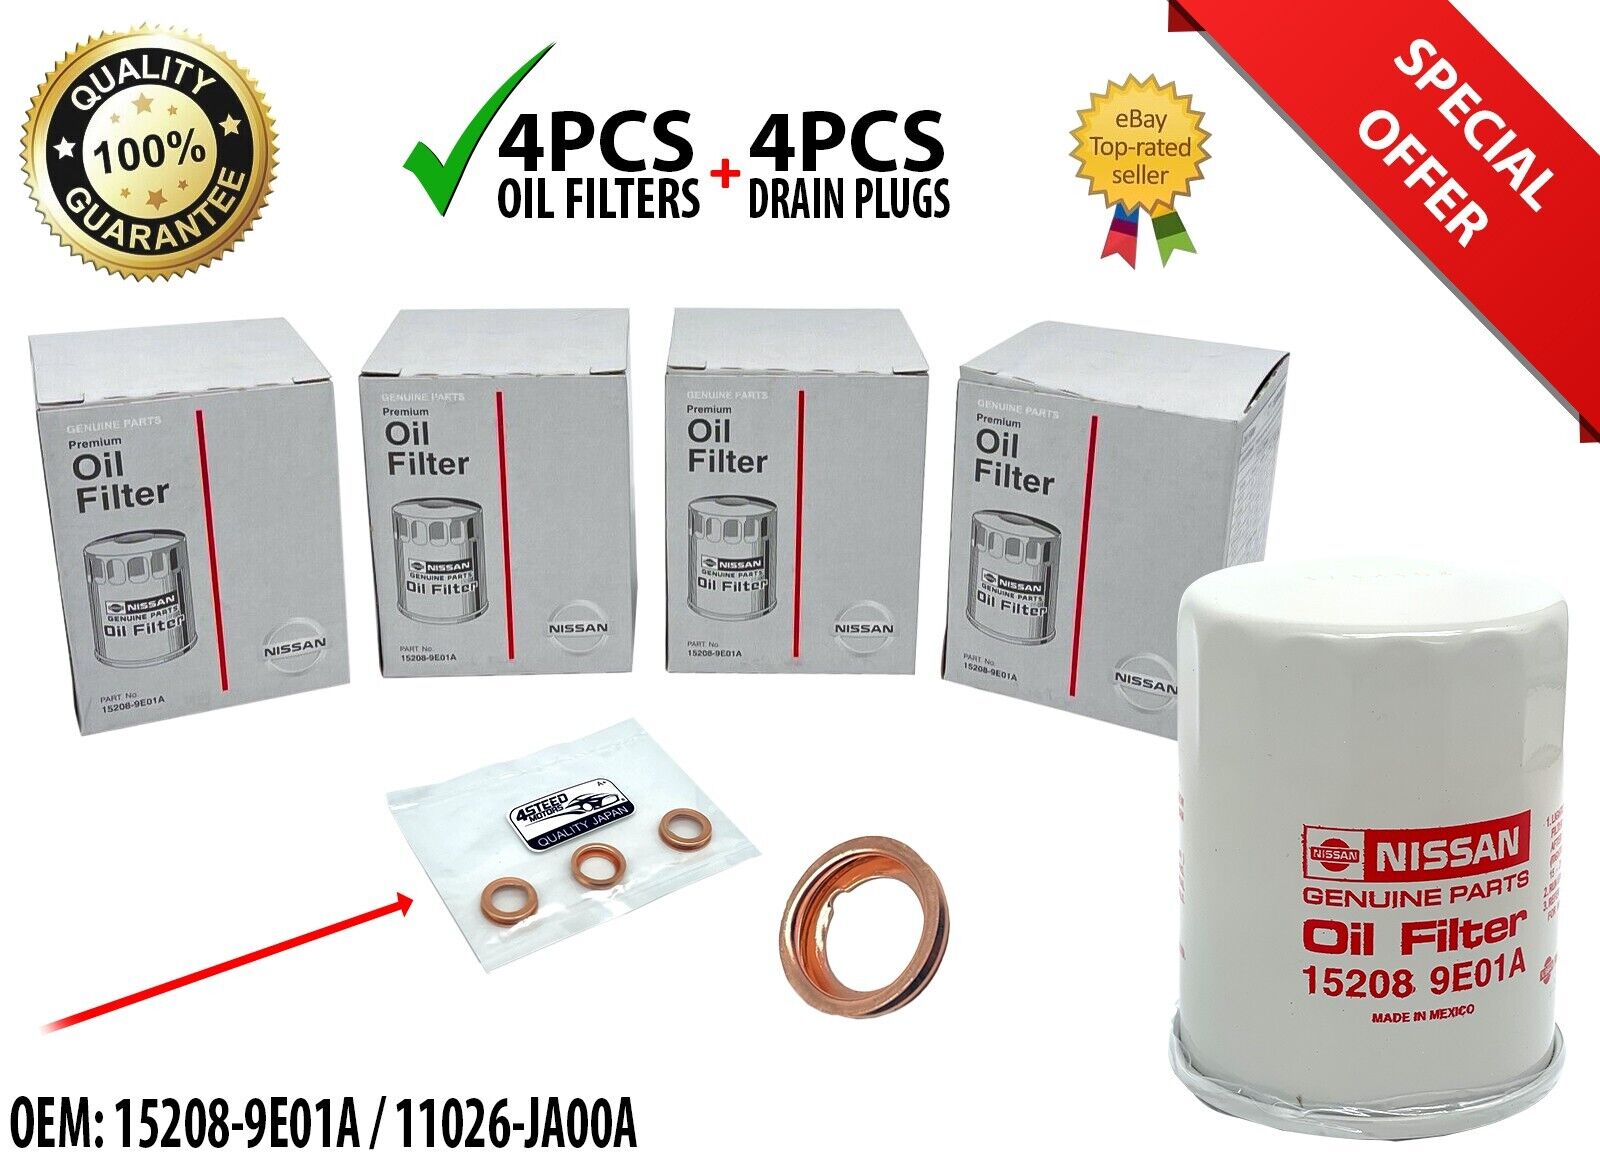 4 PCS NEW Genuine Nissan Oil Filter + Drain Plug 15208-9E01A FITS ALL MODELS